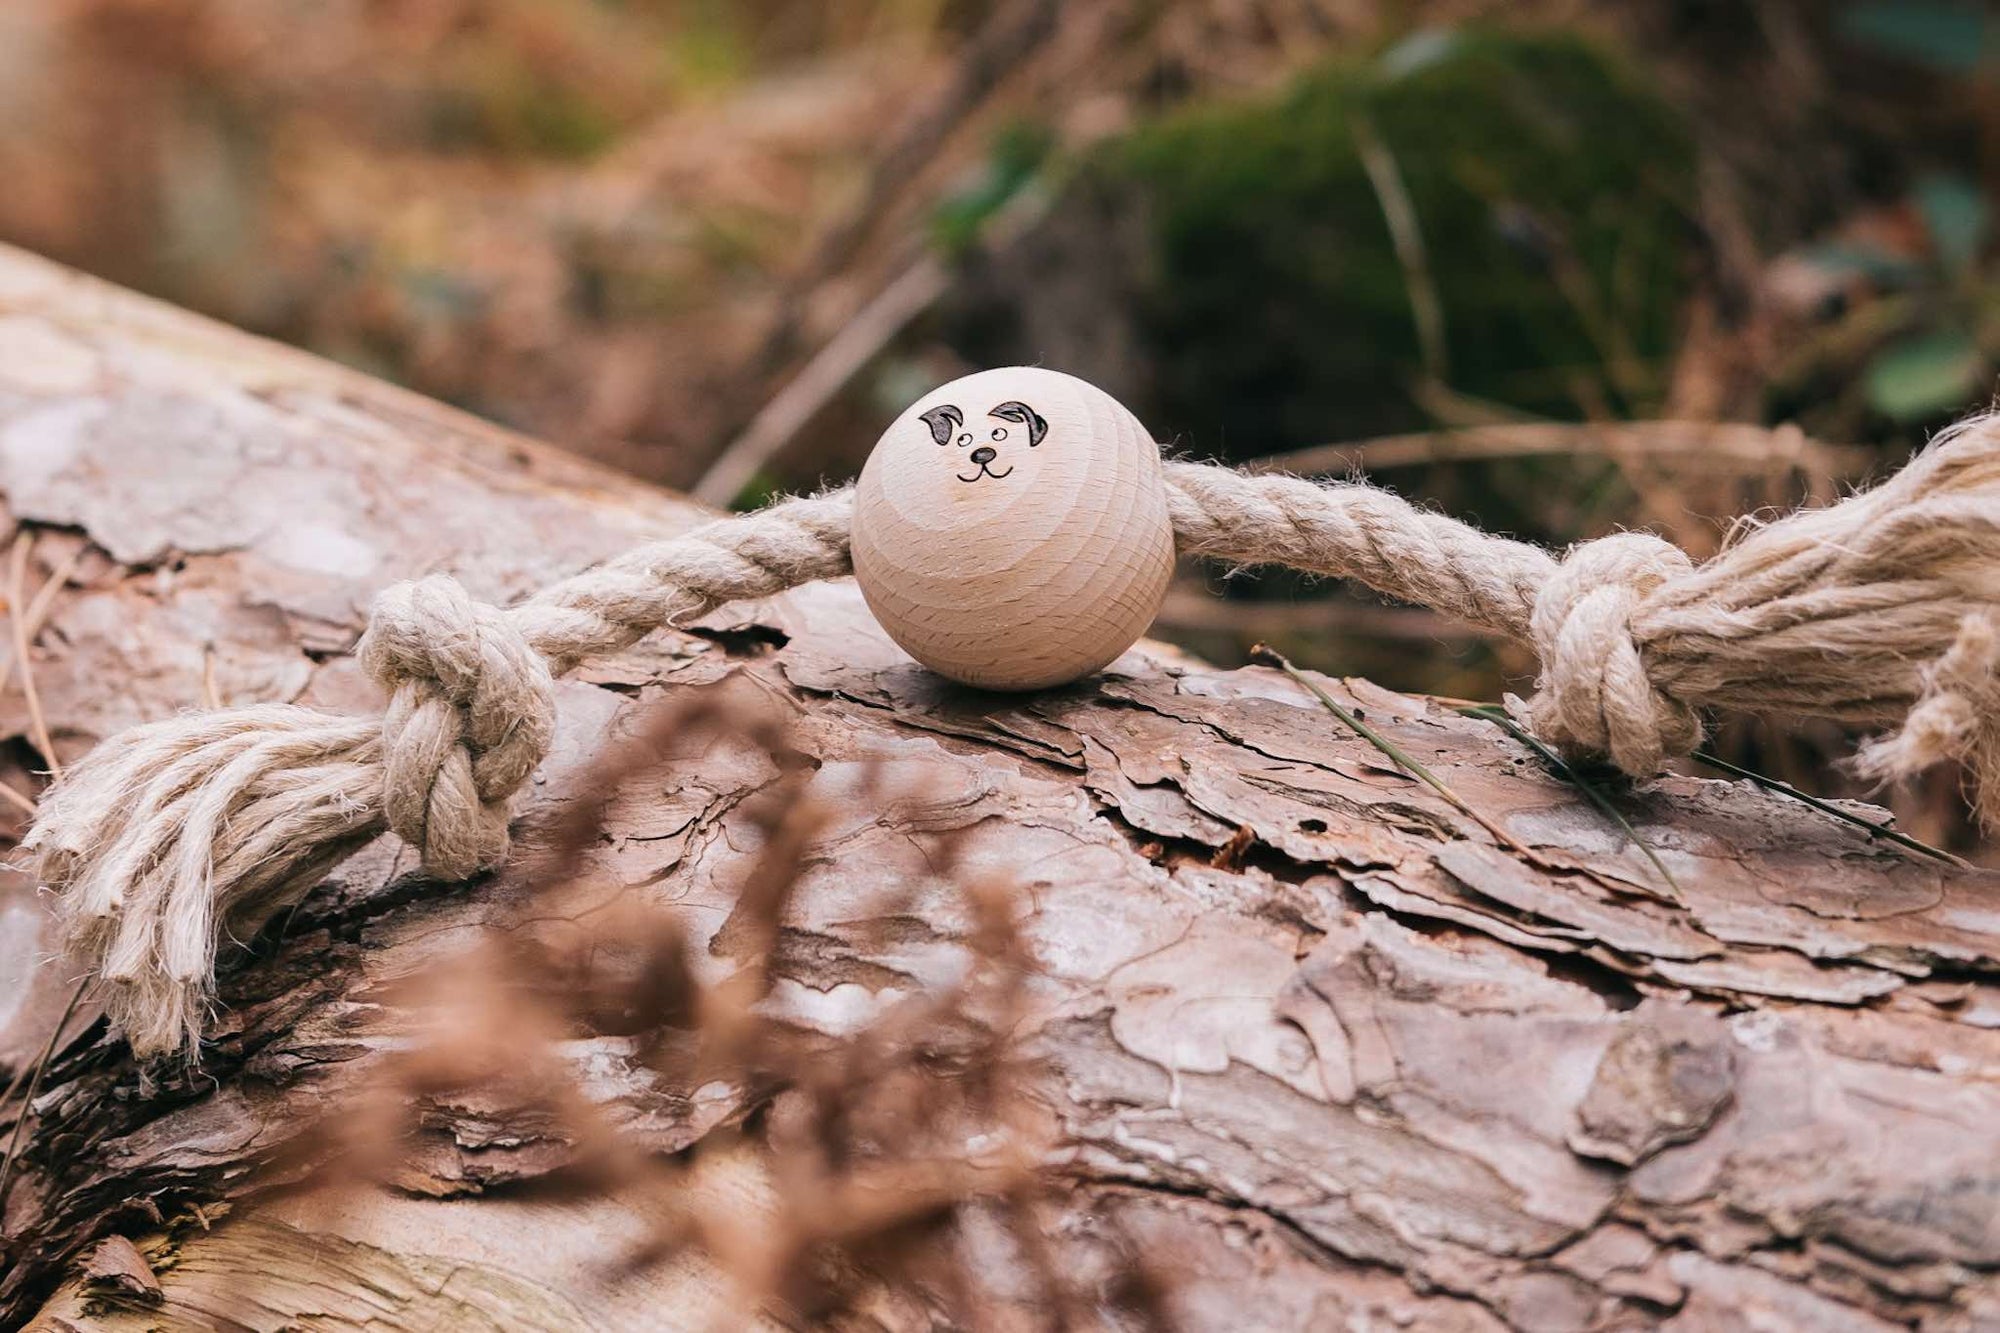 Smug Mutts Tug-a-Ball Natural Hemp and Beech Wood Dog Toy Resting on a Log